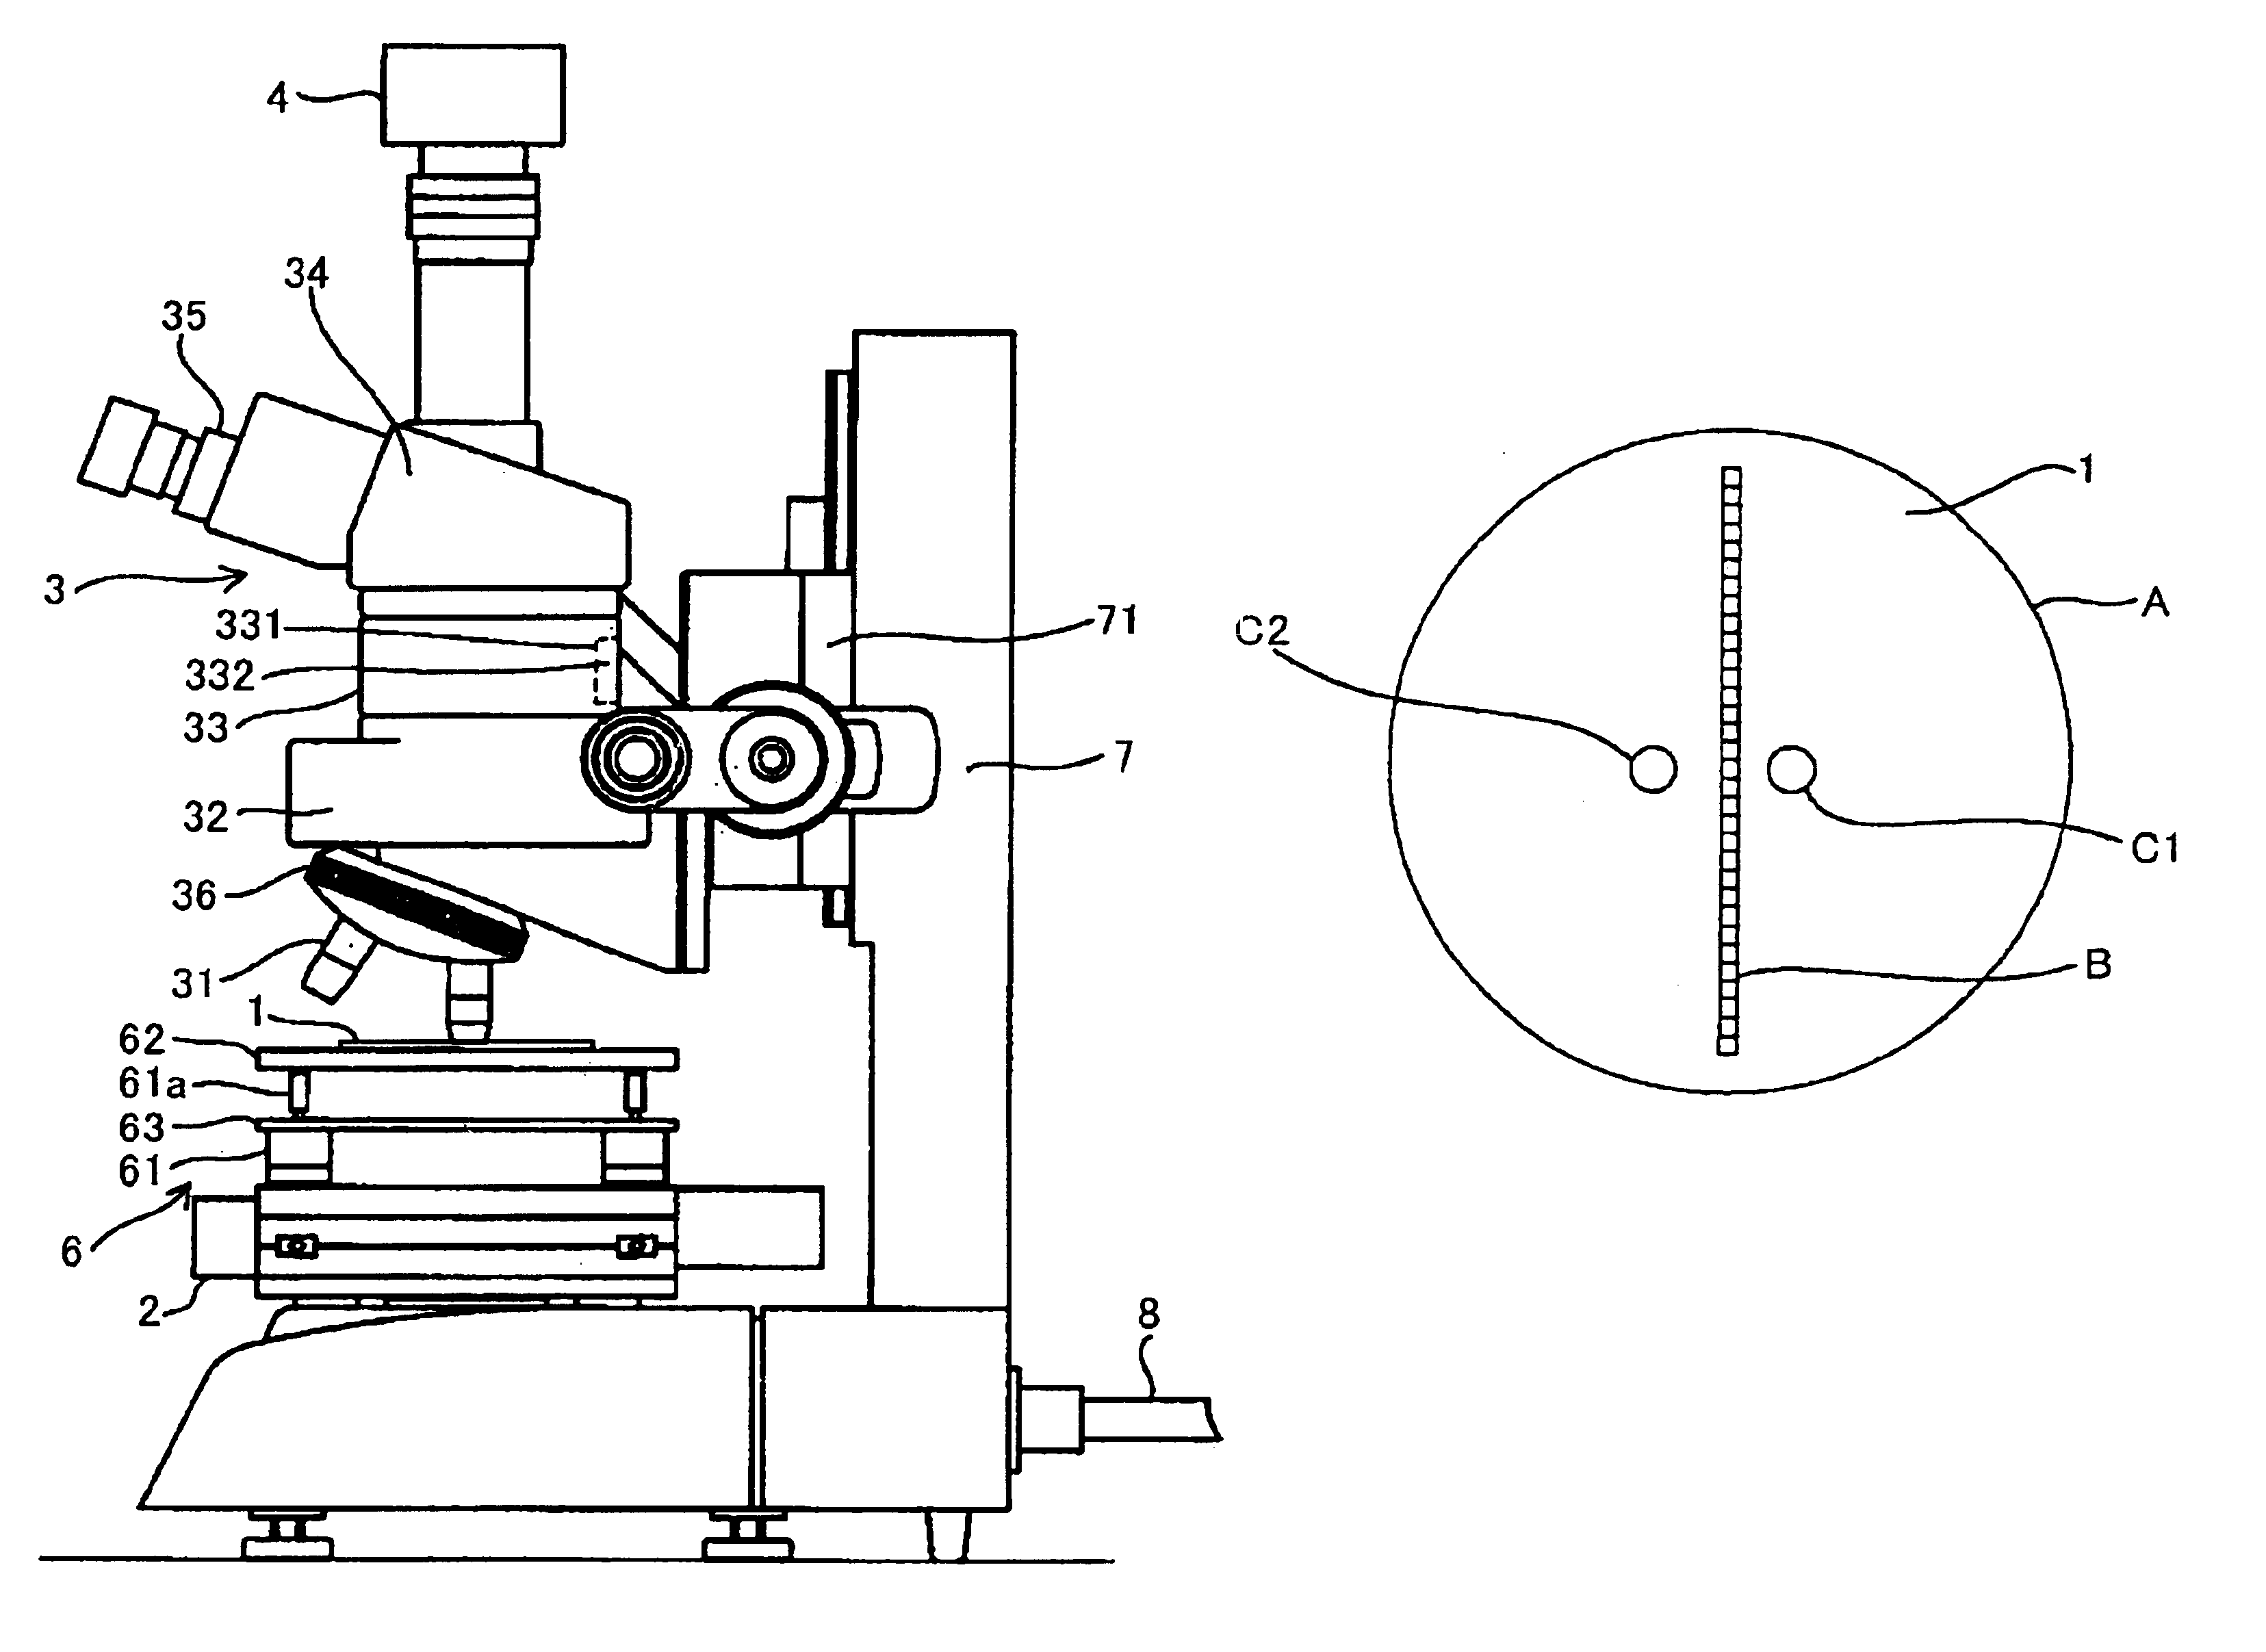 Microscope apparatus